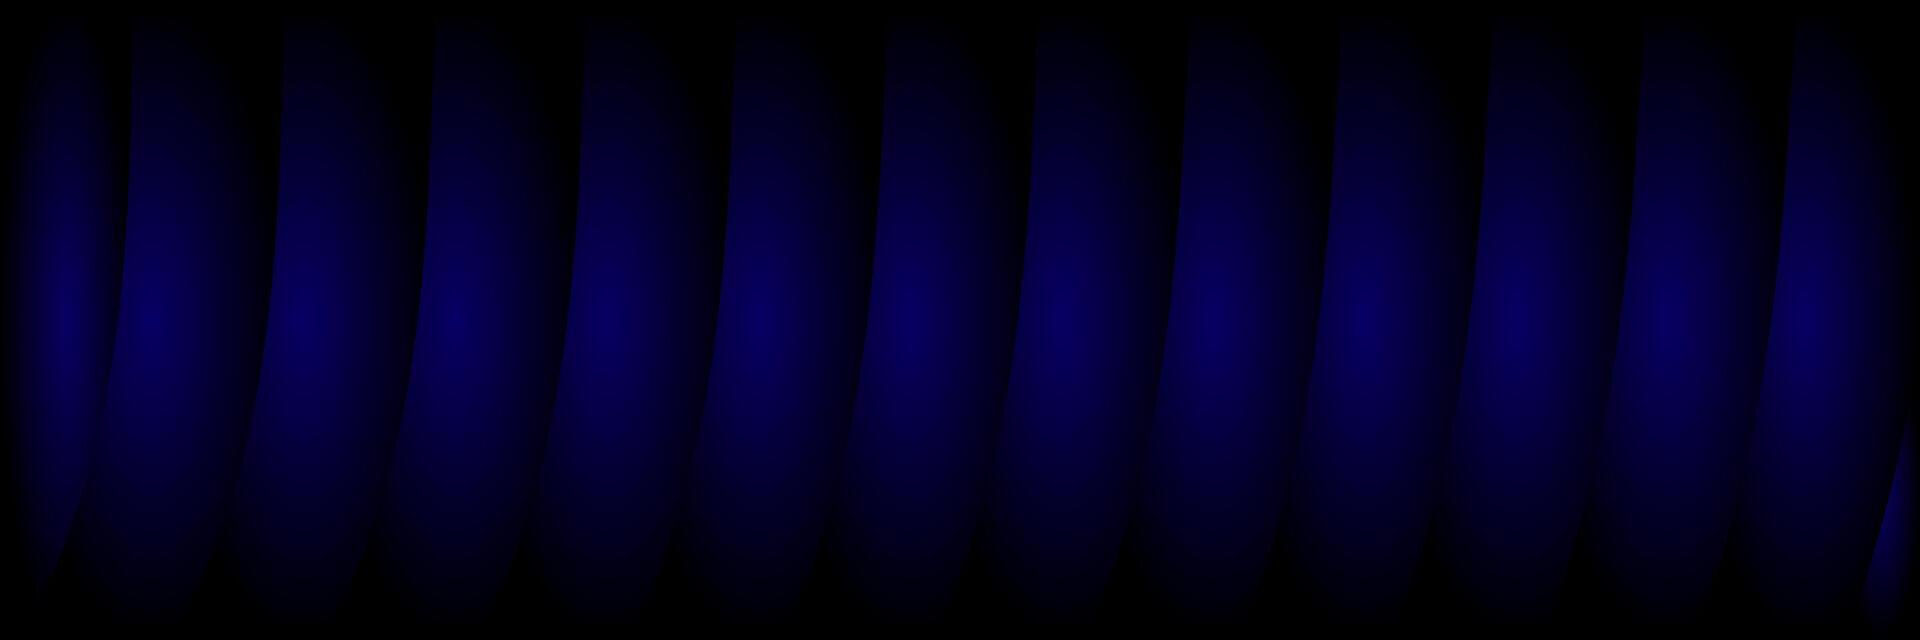 abstrakt mörk elegant blå bakgrund vektor